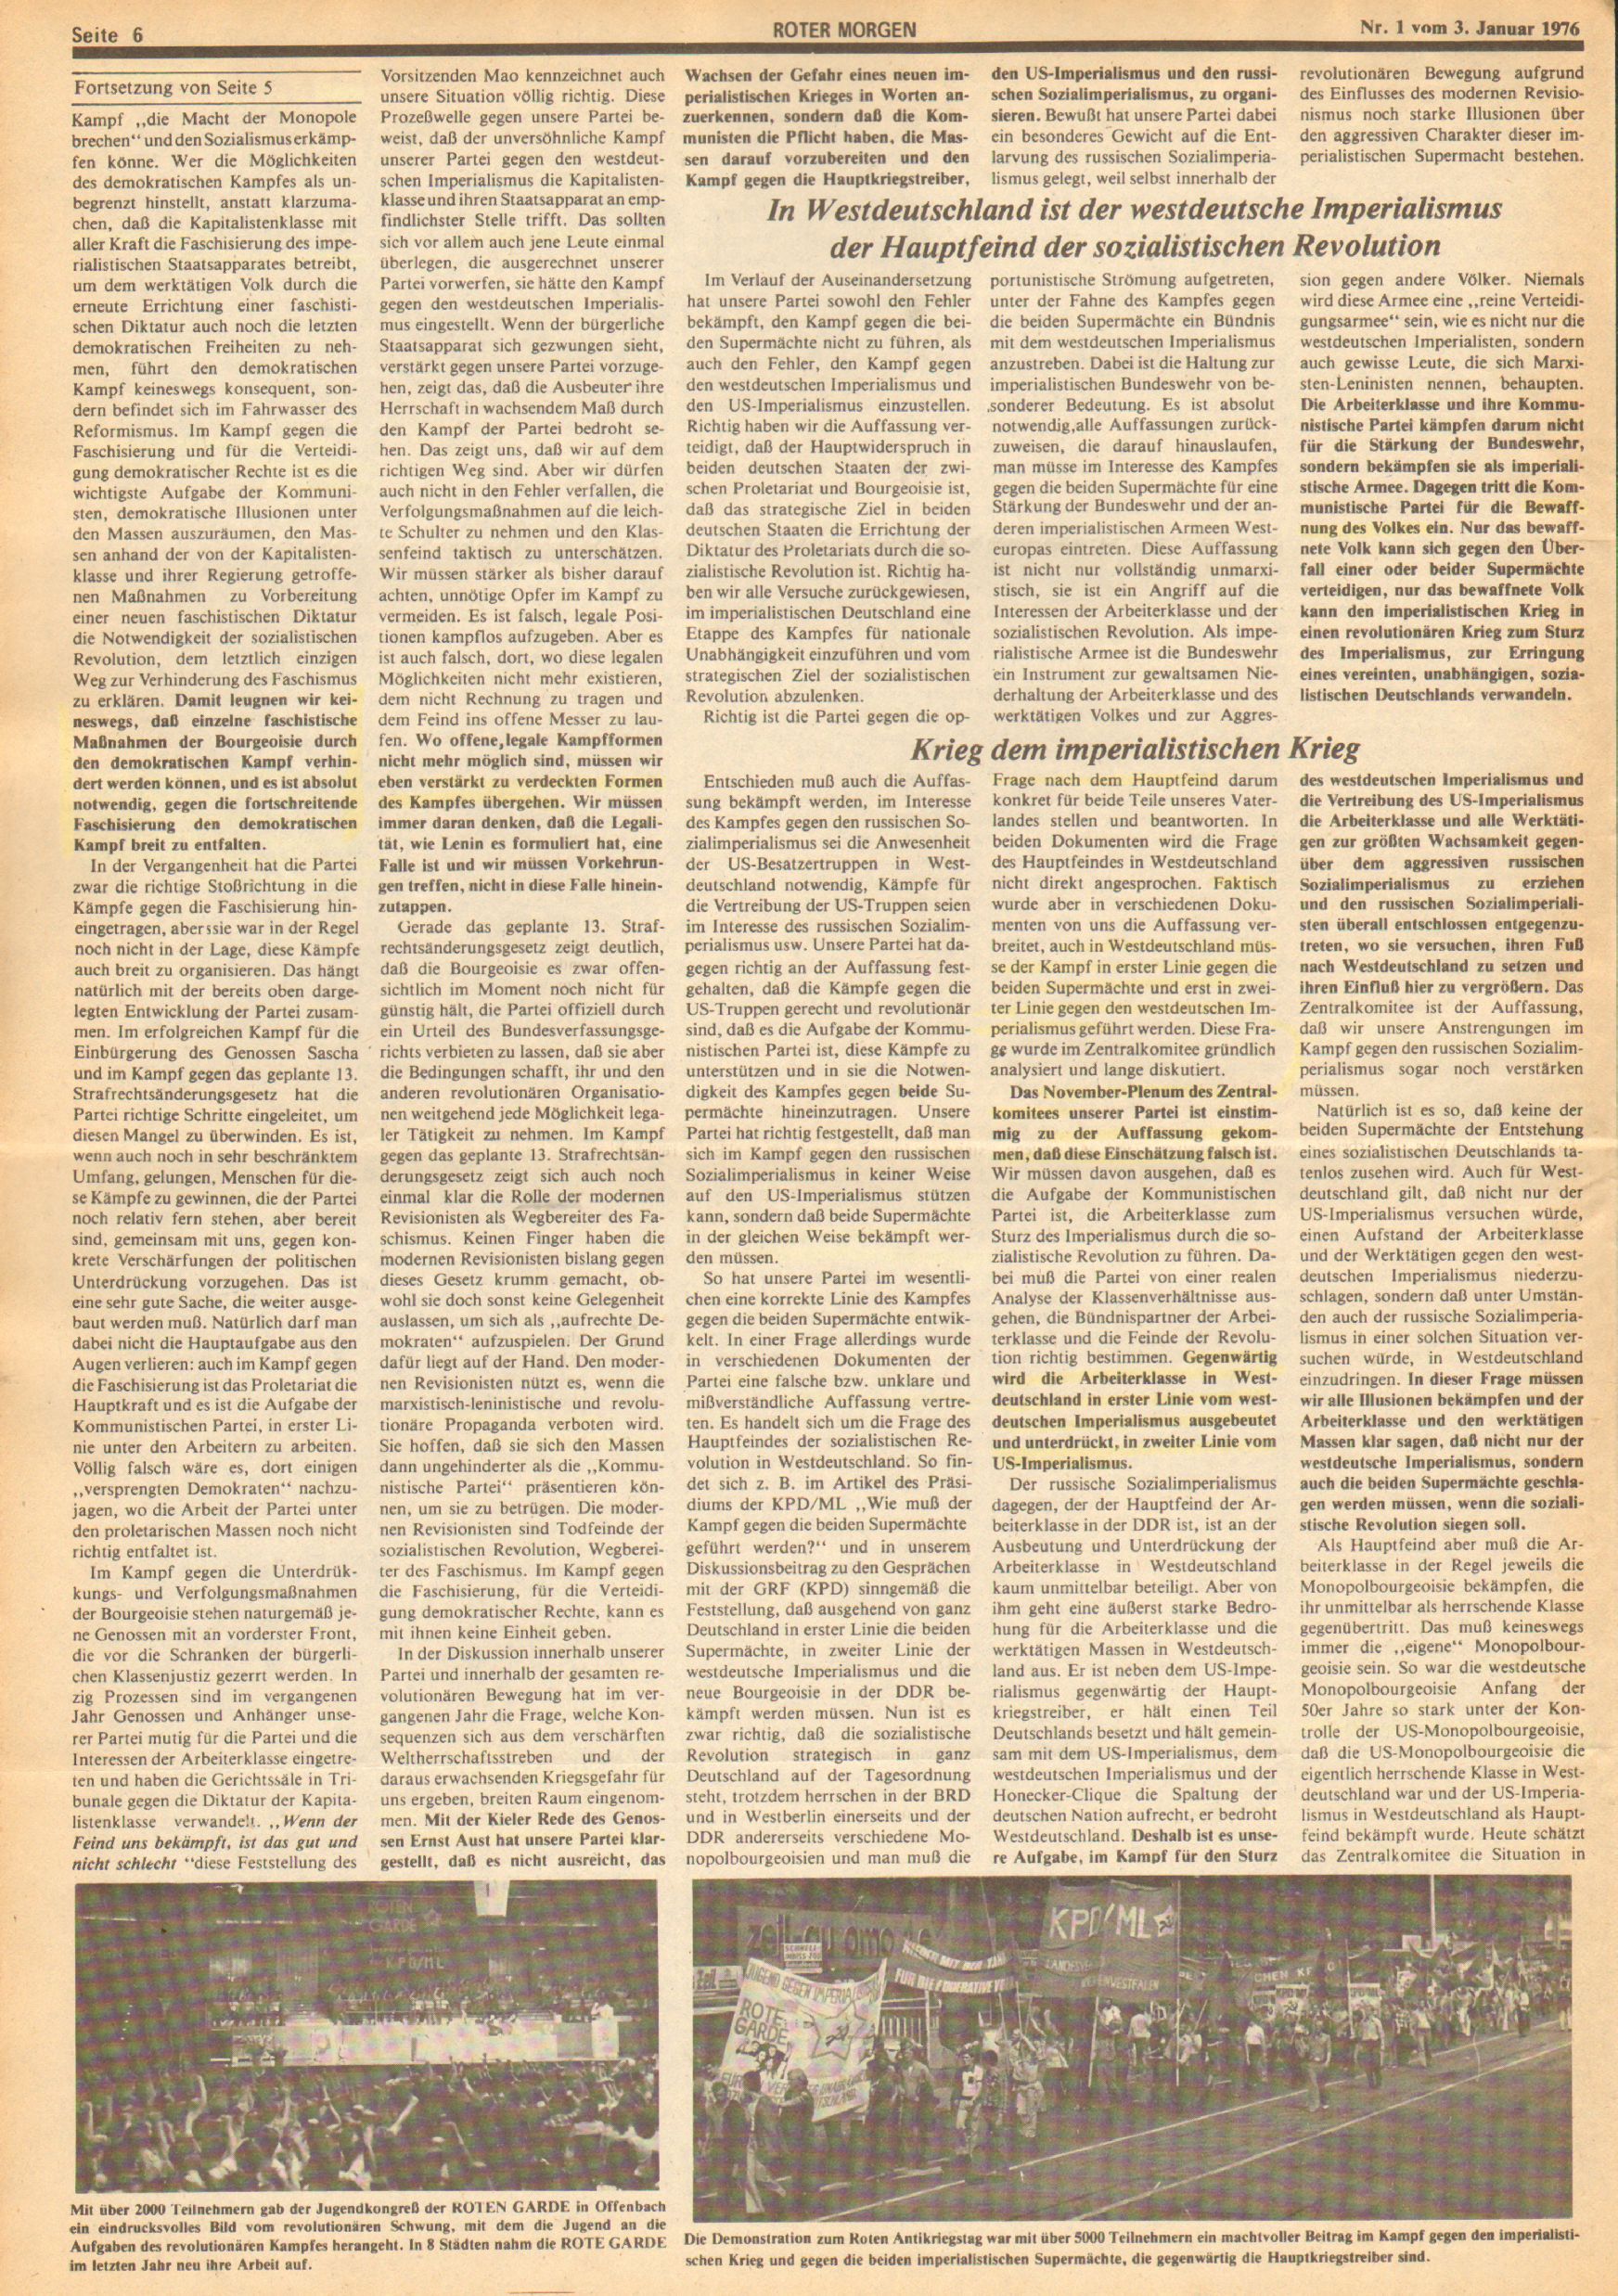 Roter Morgen, 10. Jg., 3. Januar 1976, Nr. 1, Seite 6